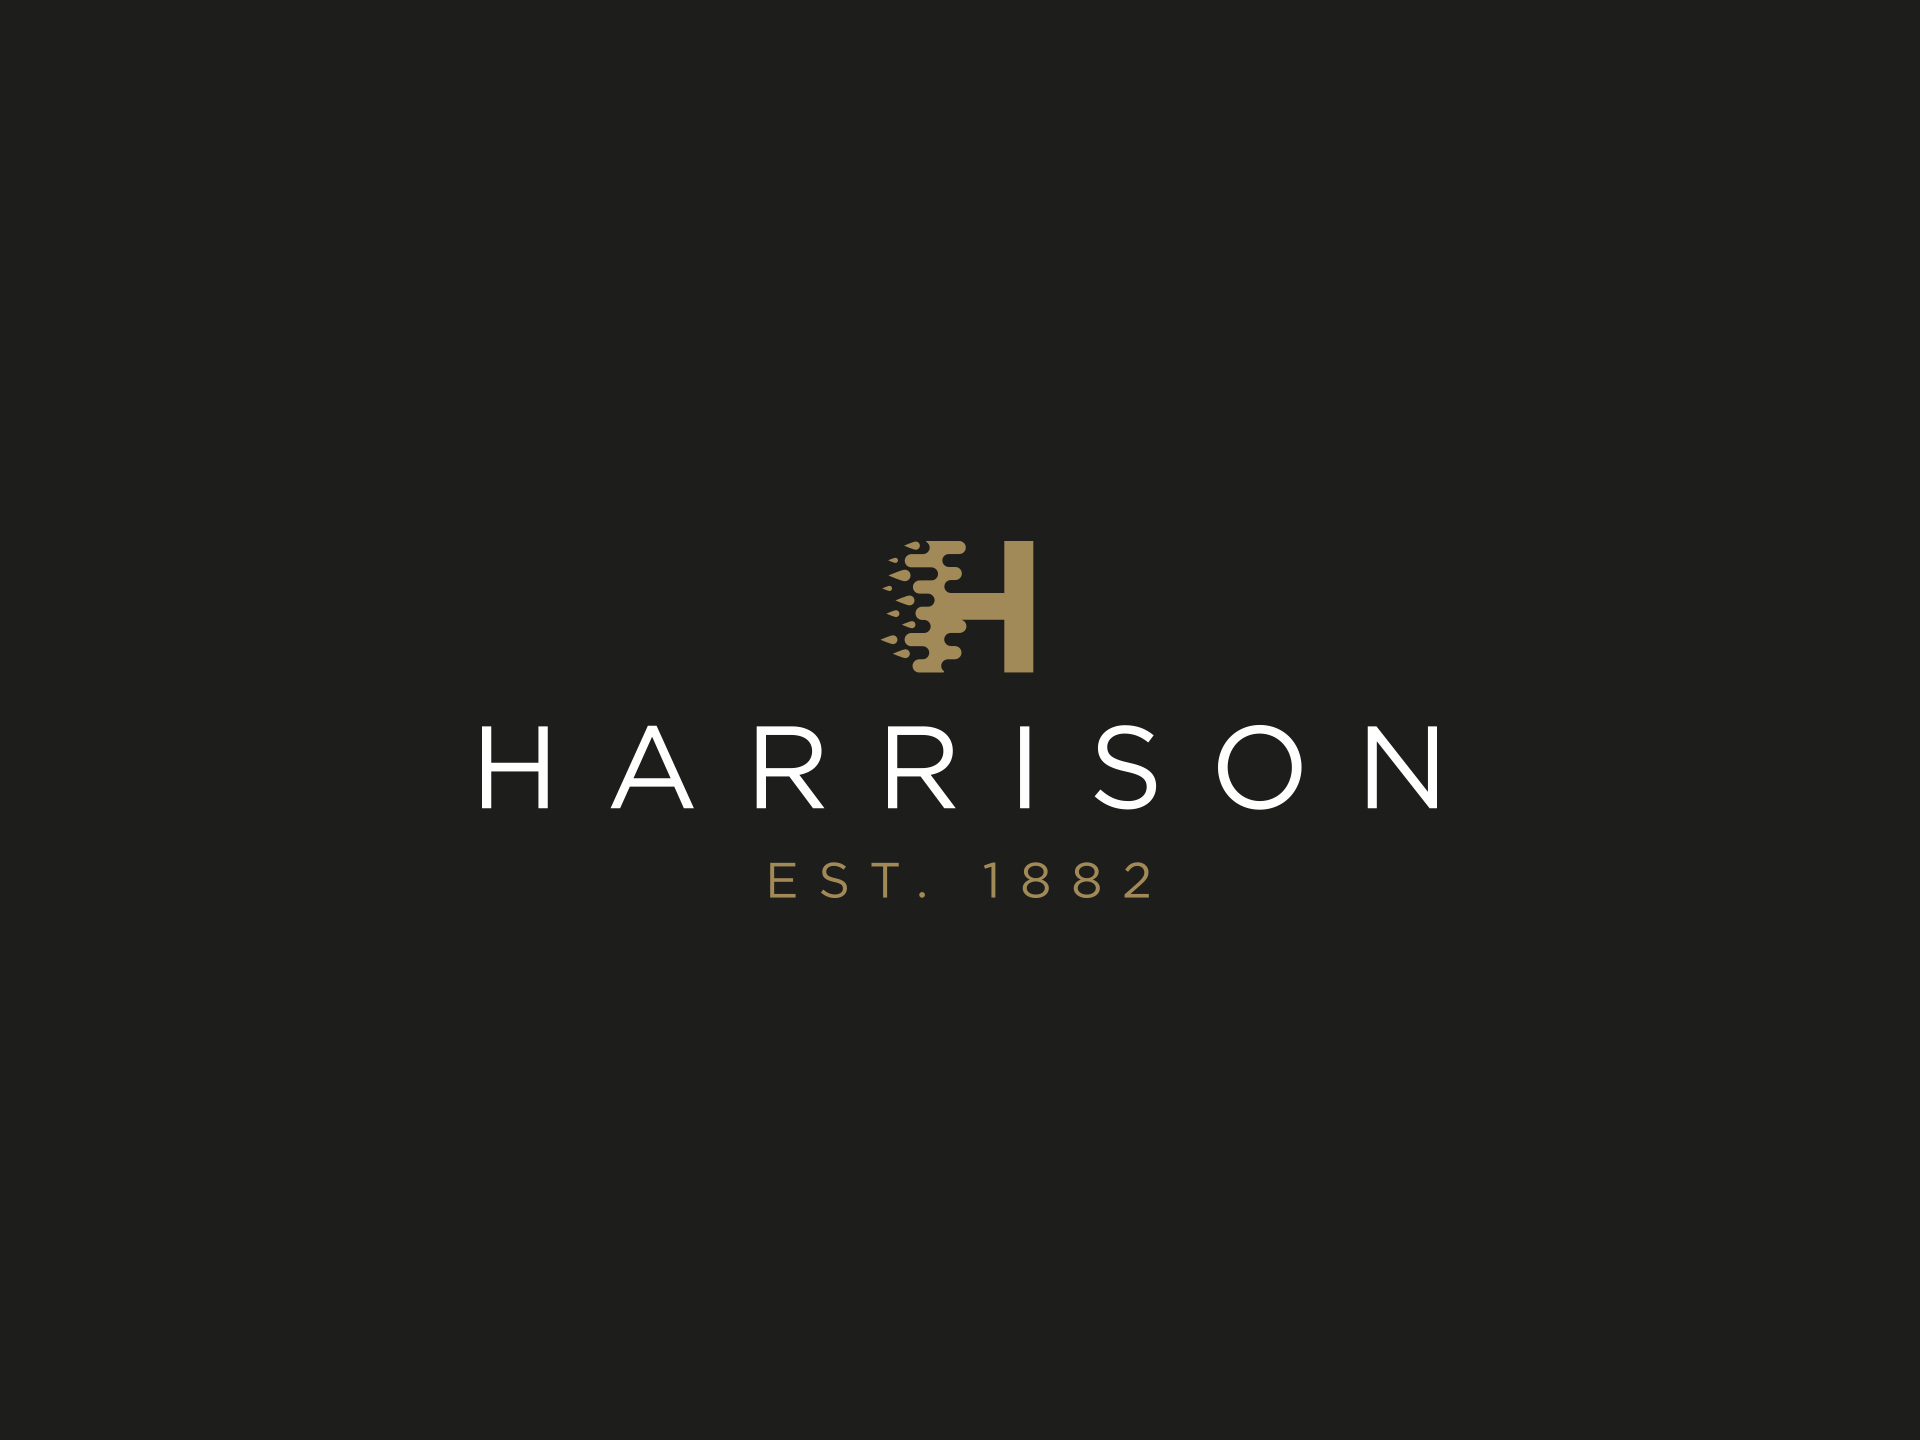 Packaging Logo - Harrison Packaging - Altogether Creative